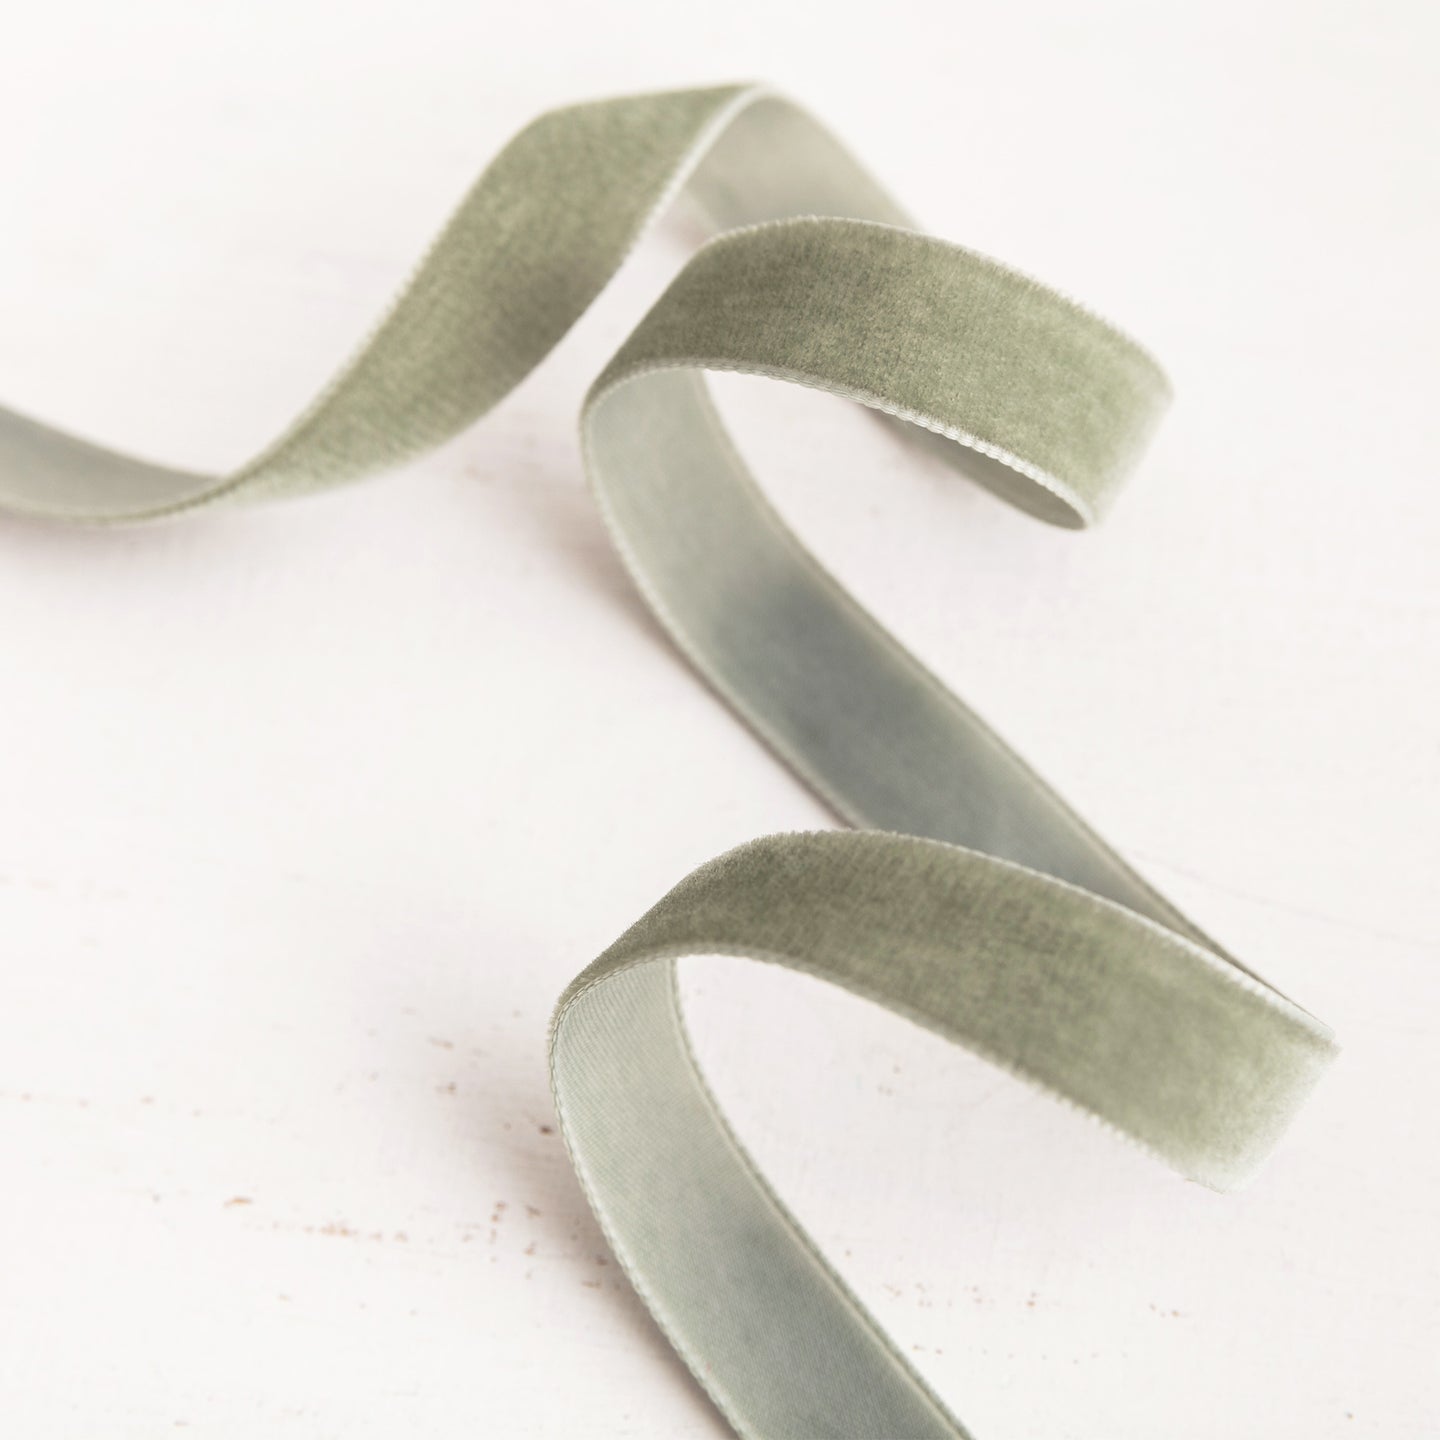 Velvet Ribbon per metre - Sage Green 16mm wide